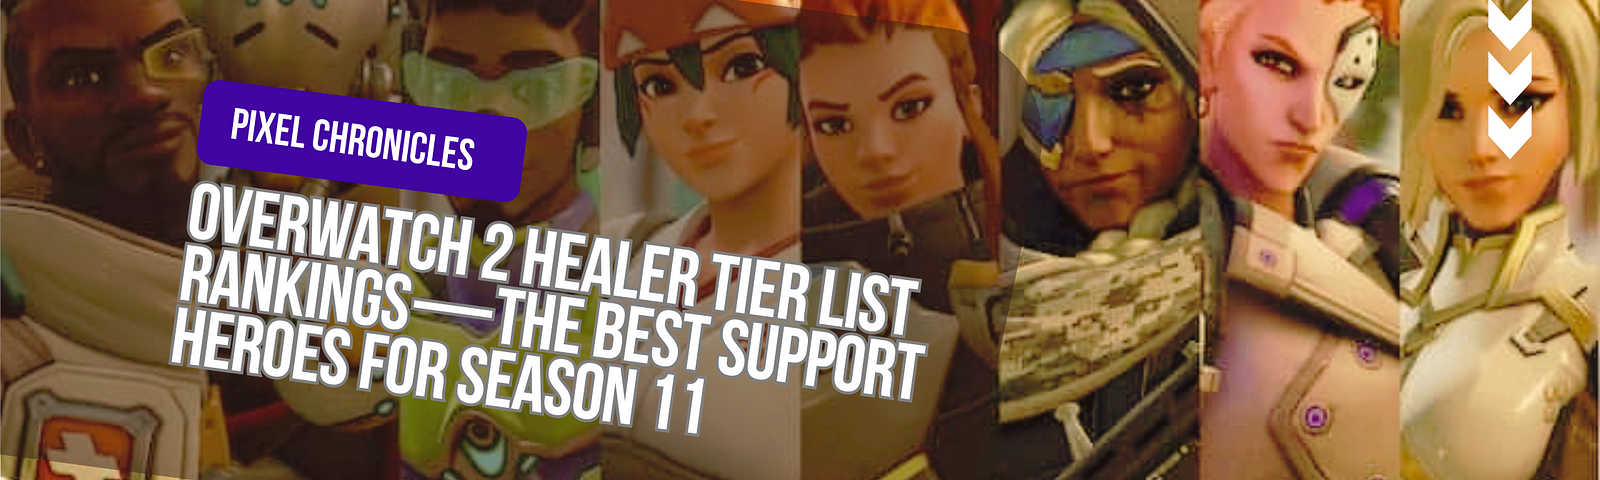 Overwatch 2 Season 11 Healer Tier List featuring top support heroes including Lucio, Kiriko, and Baptiste.